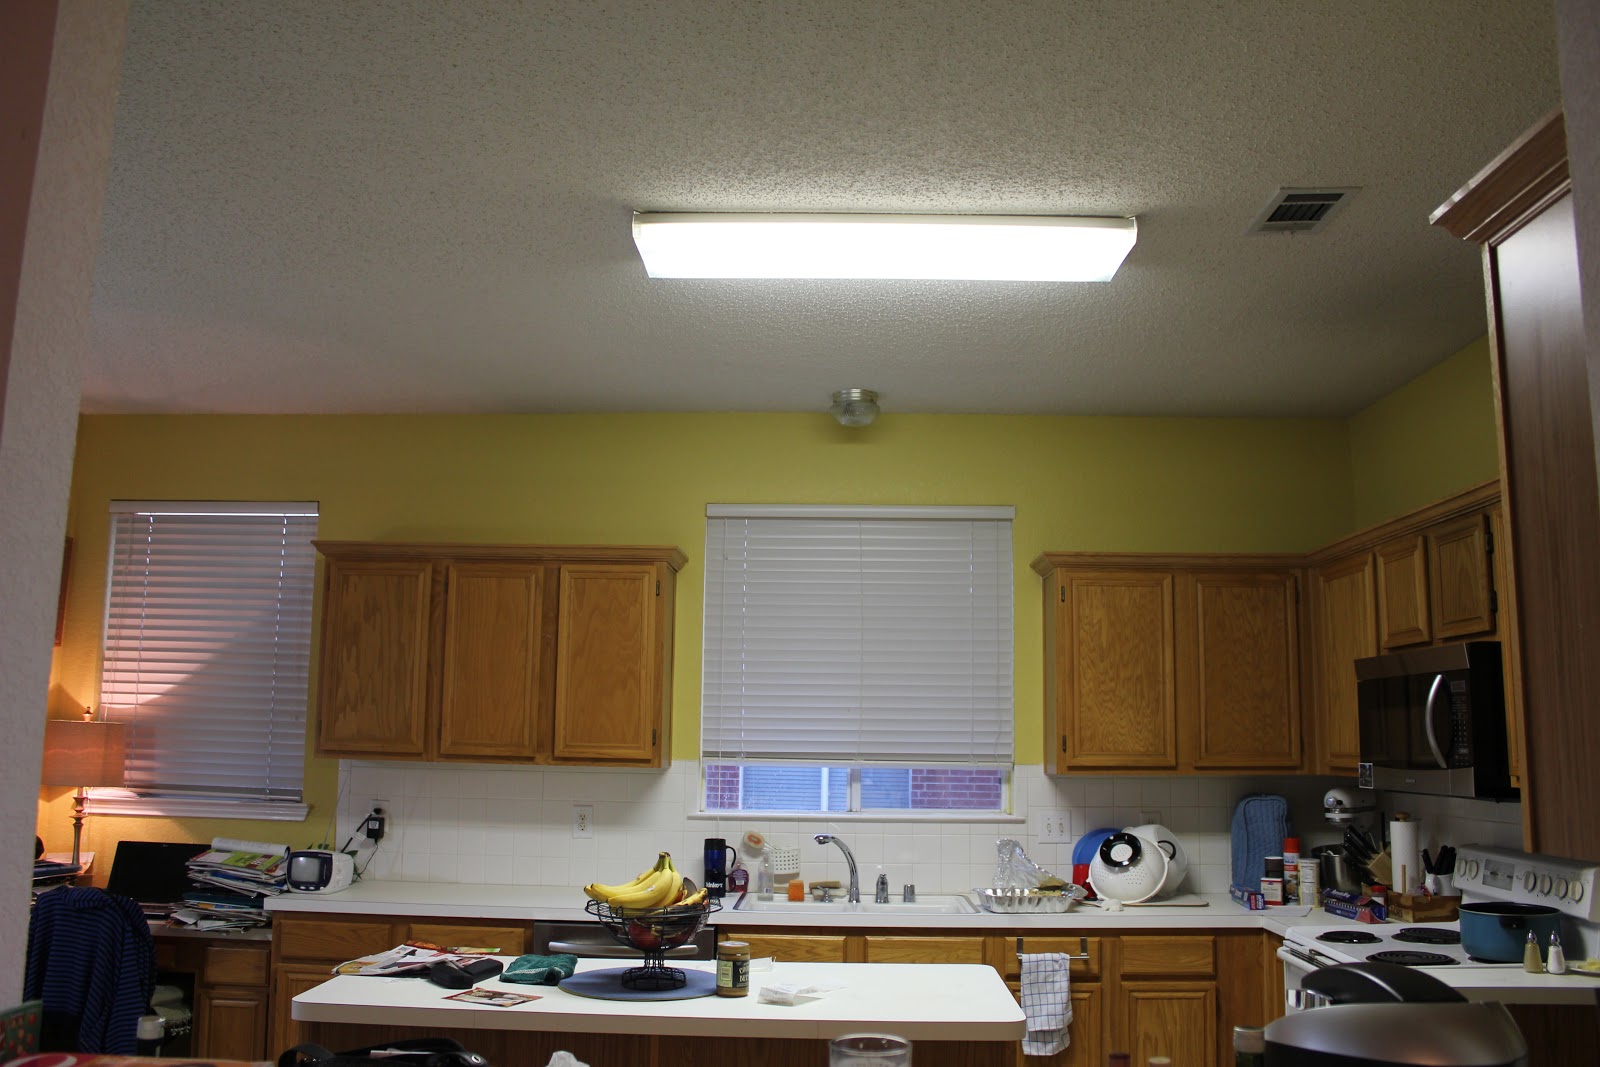 fluorescent light in the kitchen